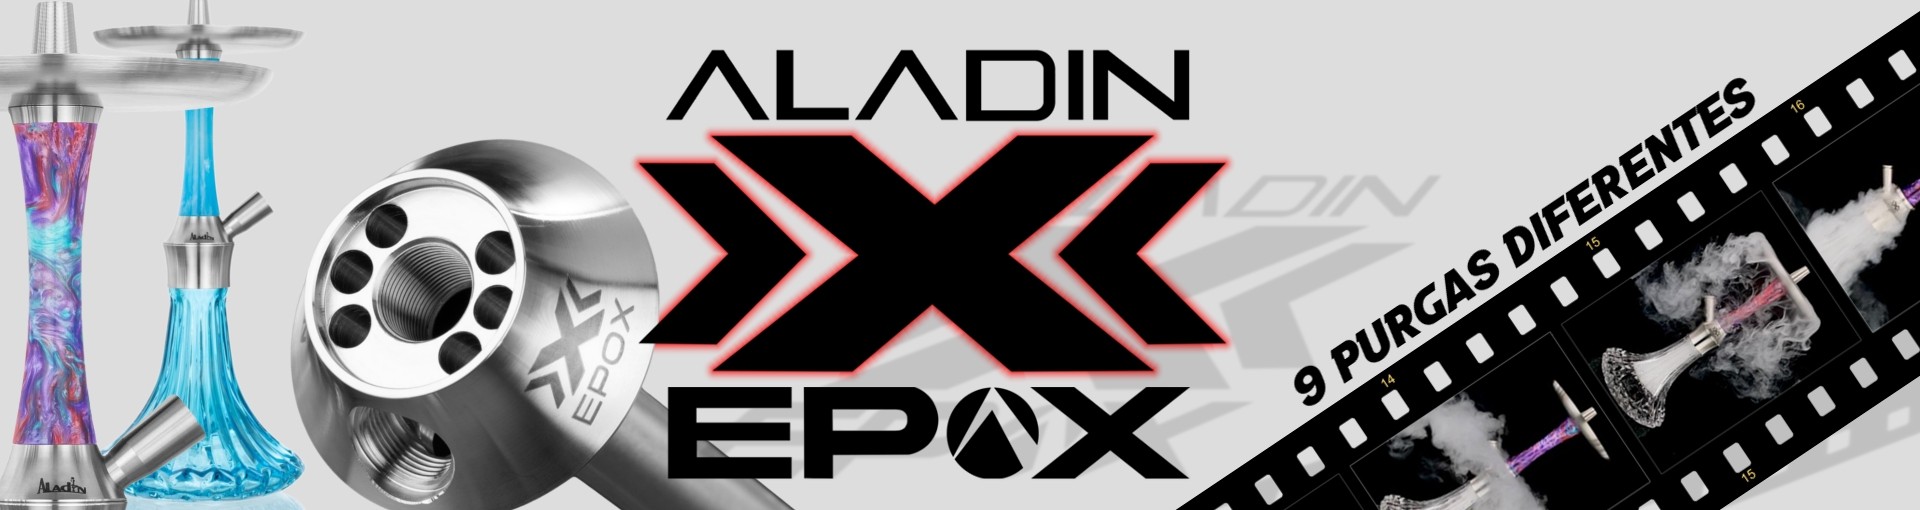 Aladin Epox 360